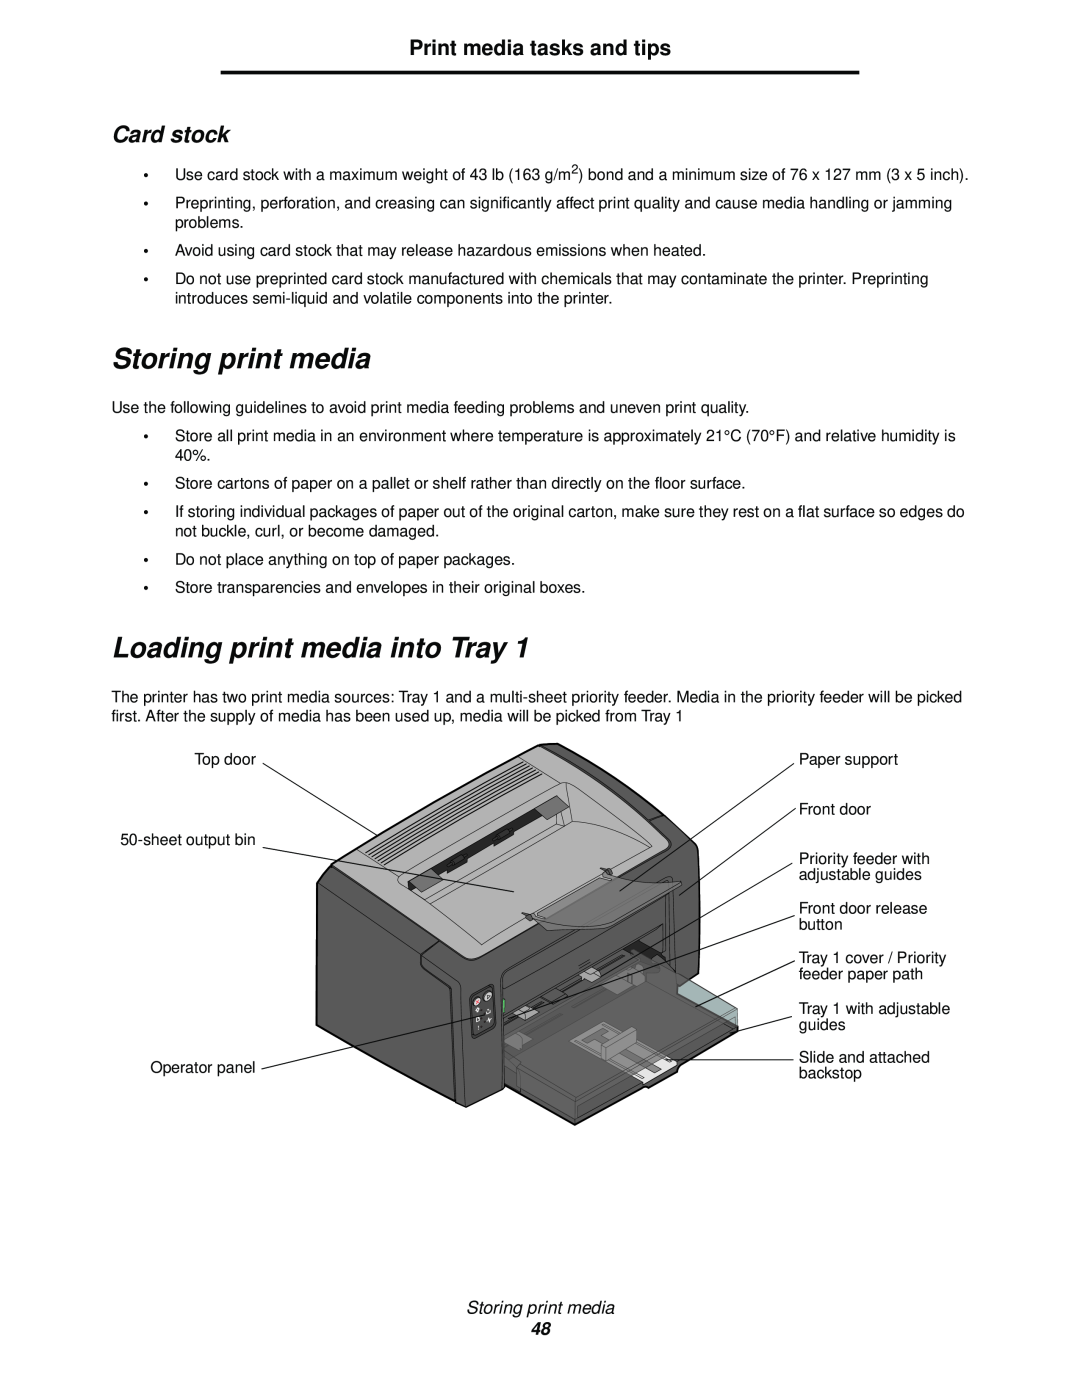 Lexmark 120 manual Storing print media, Loading print media into Tray, Card stock, Print media tasks and tips 